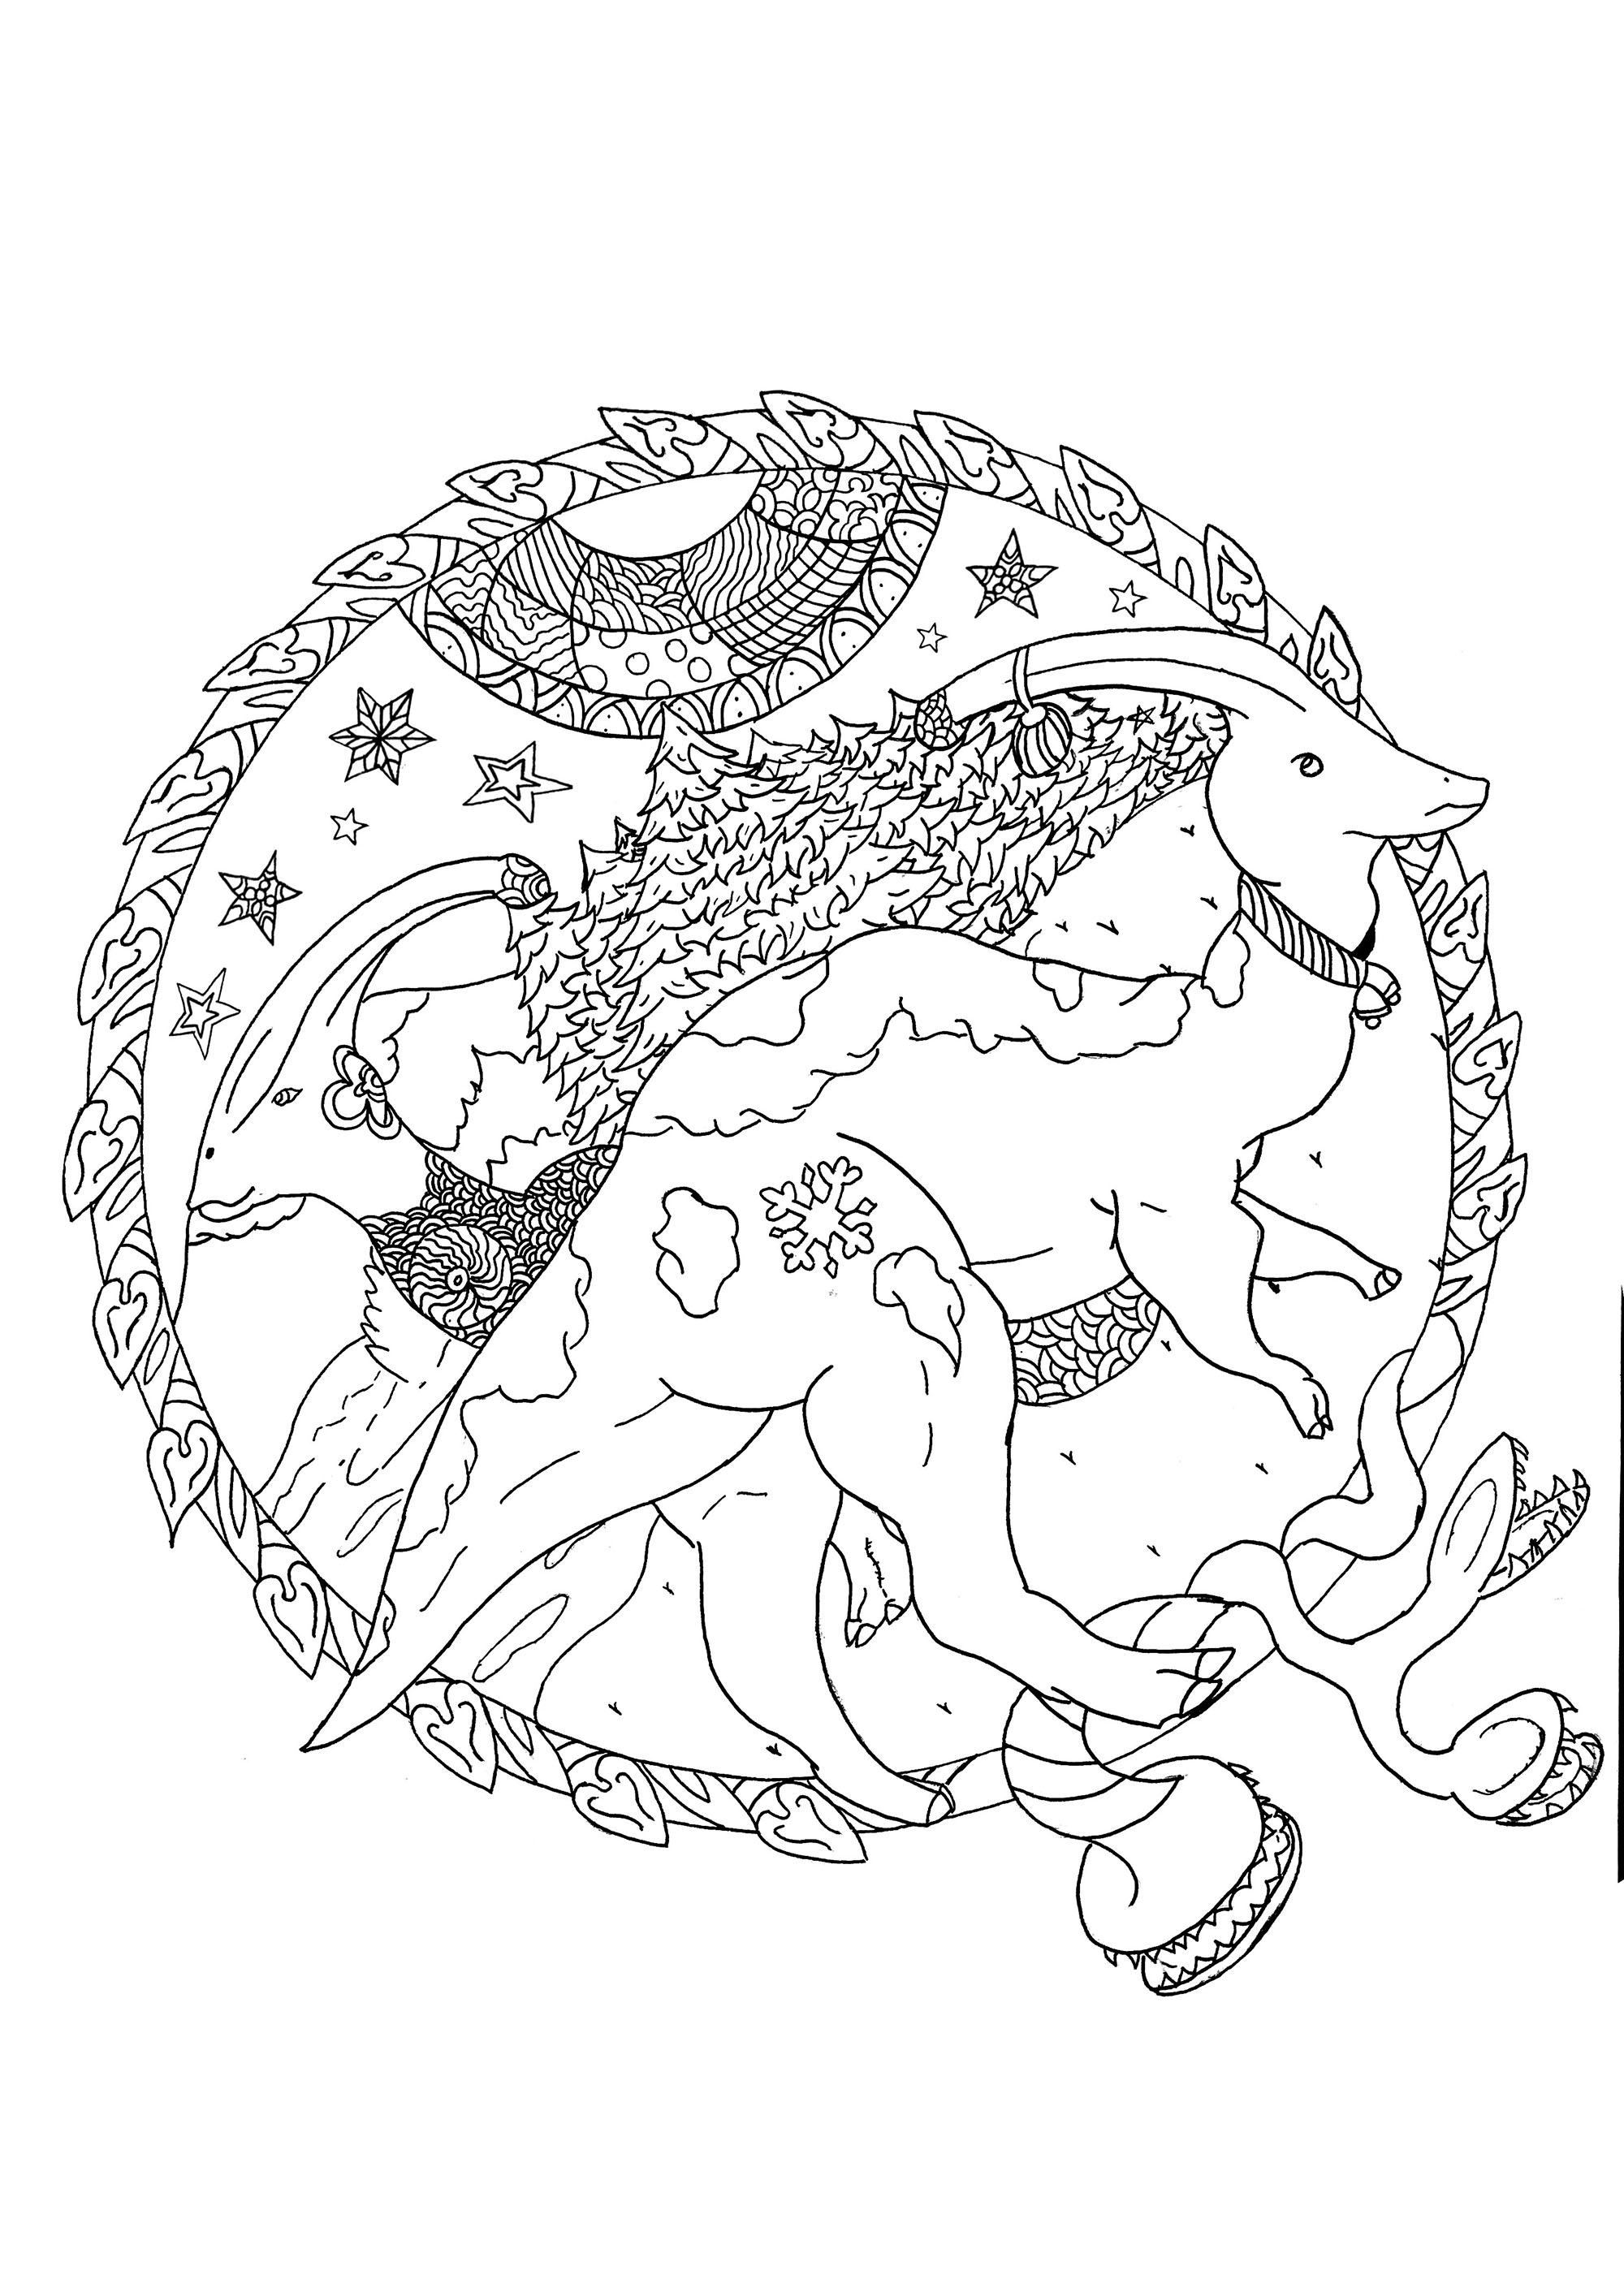 Two Parasaurolophus with pretty Christmas motifs